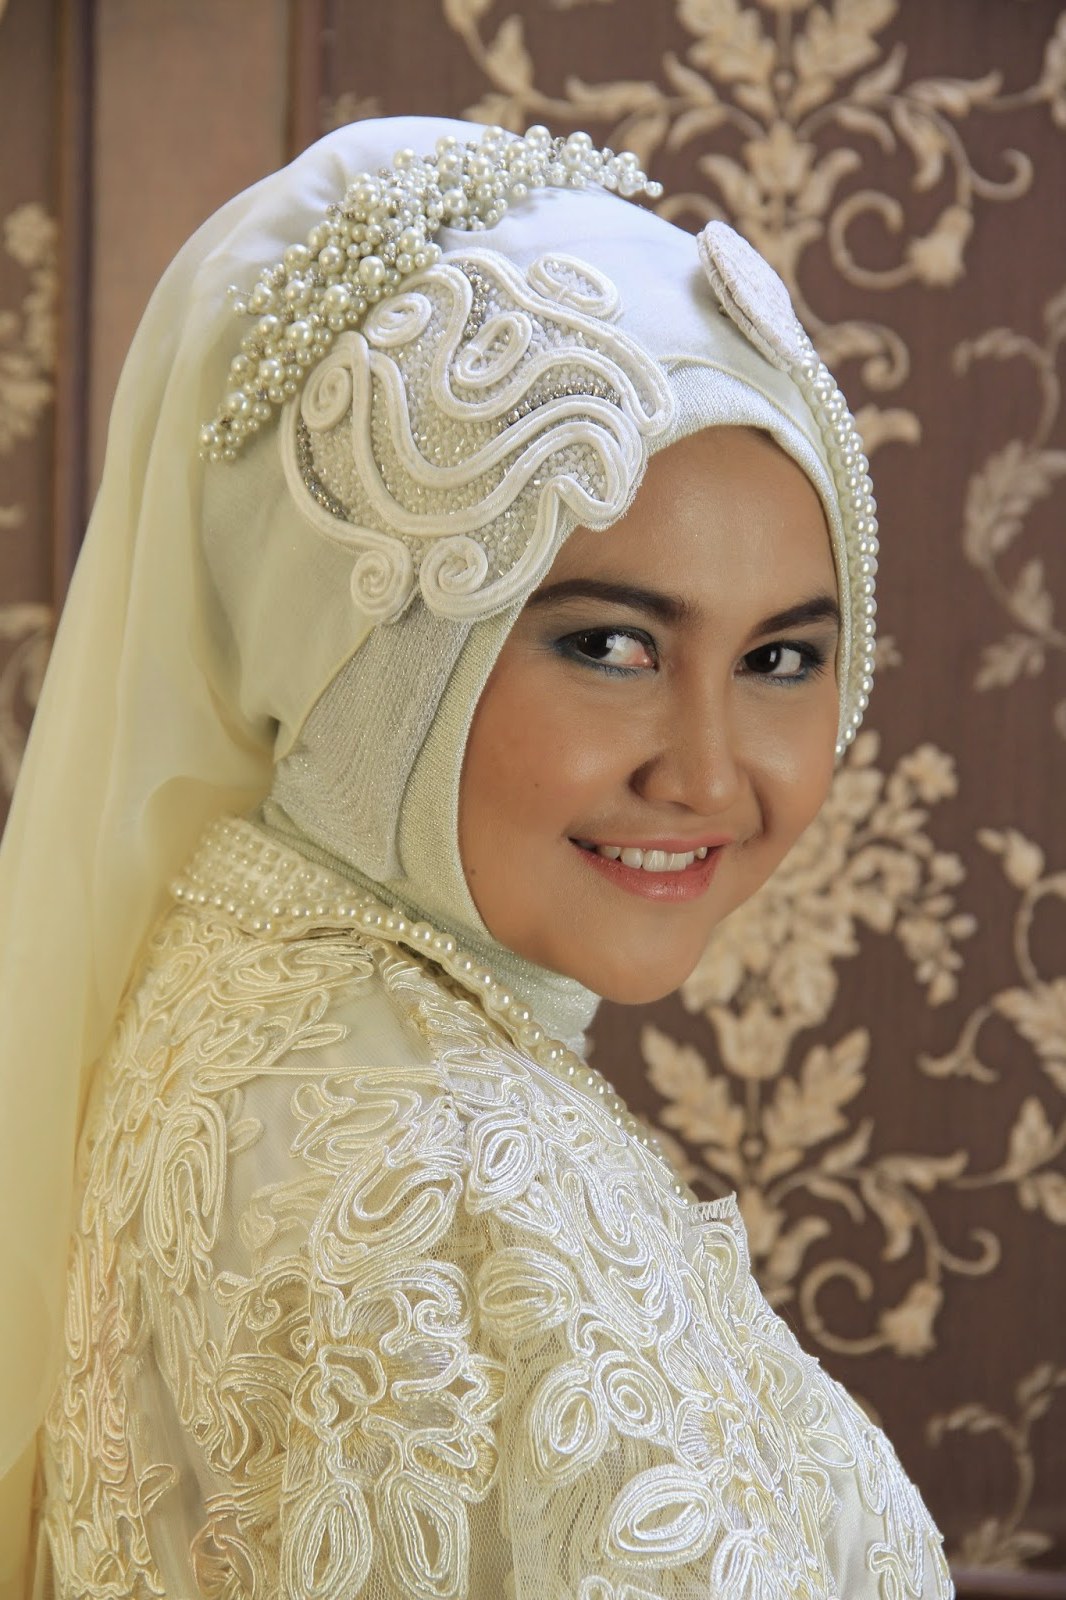 Design Gaun Pengantin 2016 Muslim E9dx Padme Wedding Dress Confessions Of A Seamstress the